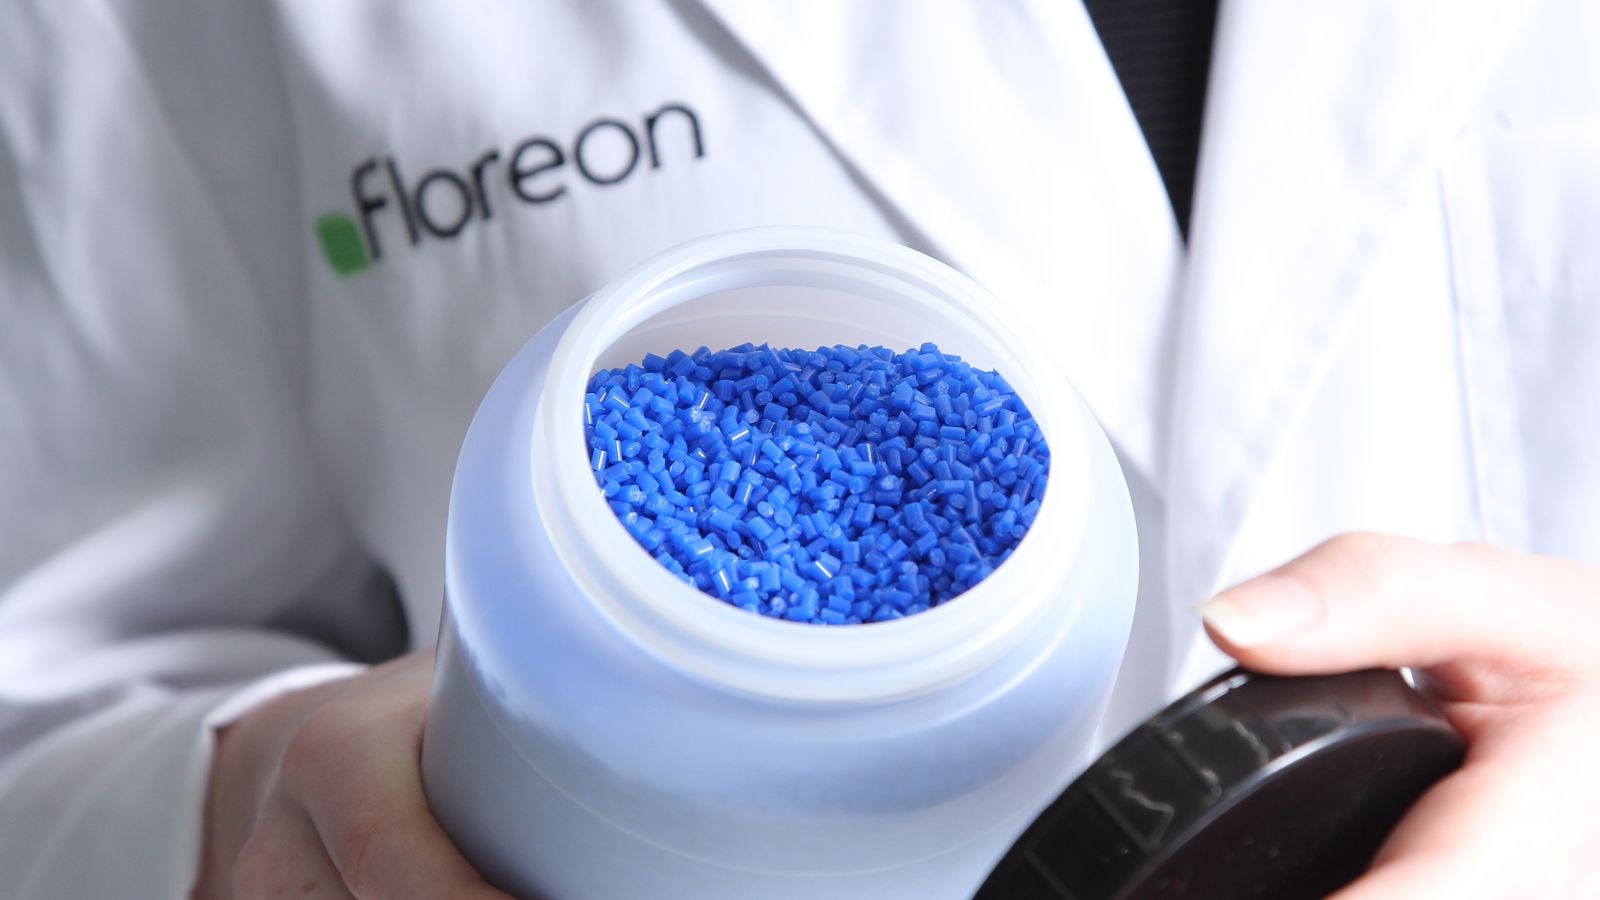 Northern Gritstone injects £2m into bioplastics developer Floreon